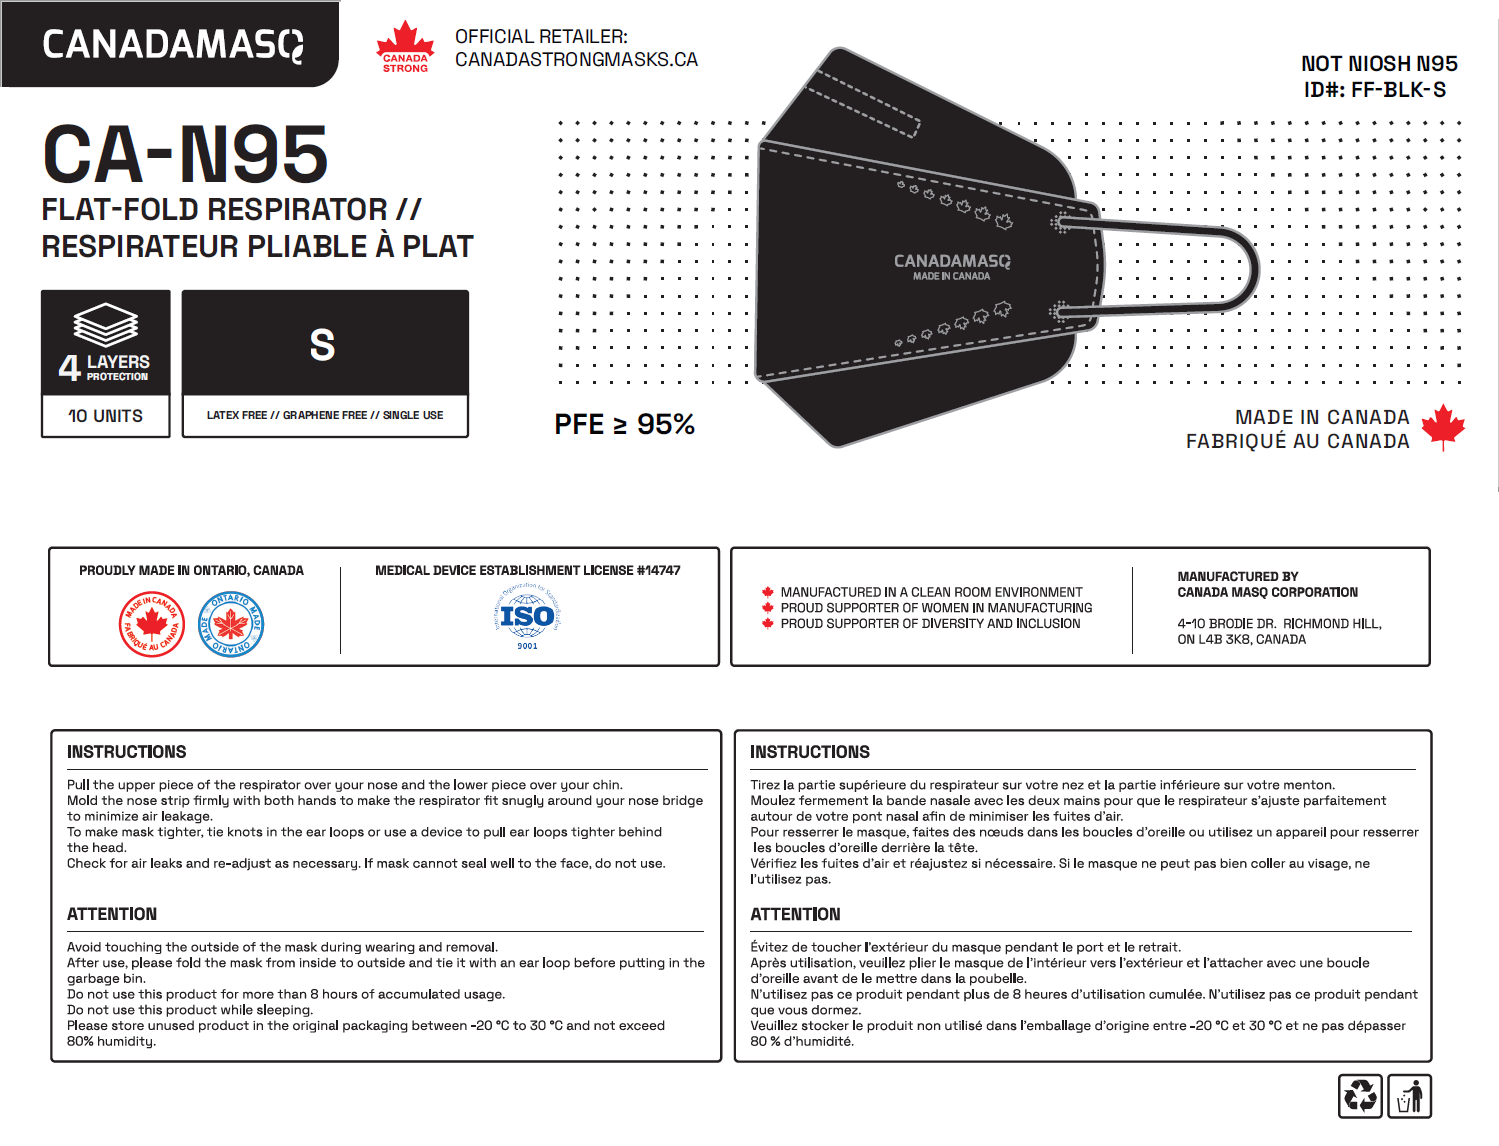 Canada Masq CA-N95 size small black respirator mask bag packaging